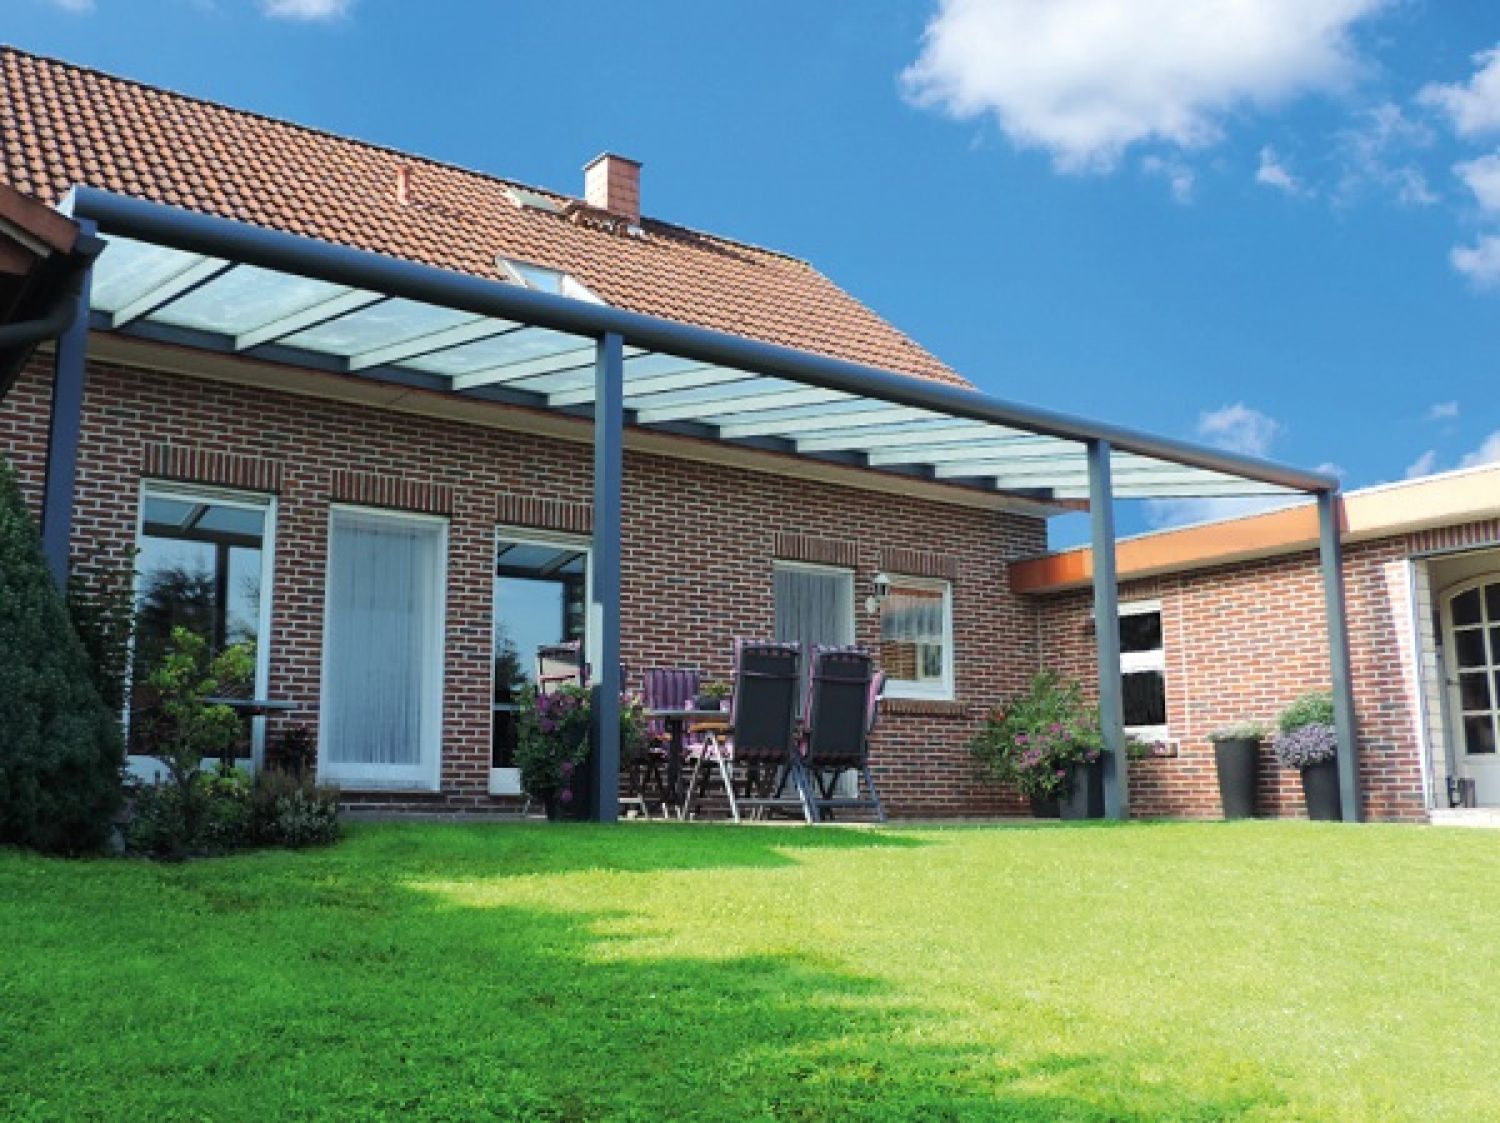 Profiline XXL veranda 1200x400 cm - polycarbonaat dak